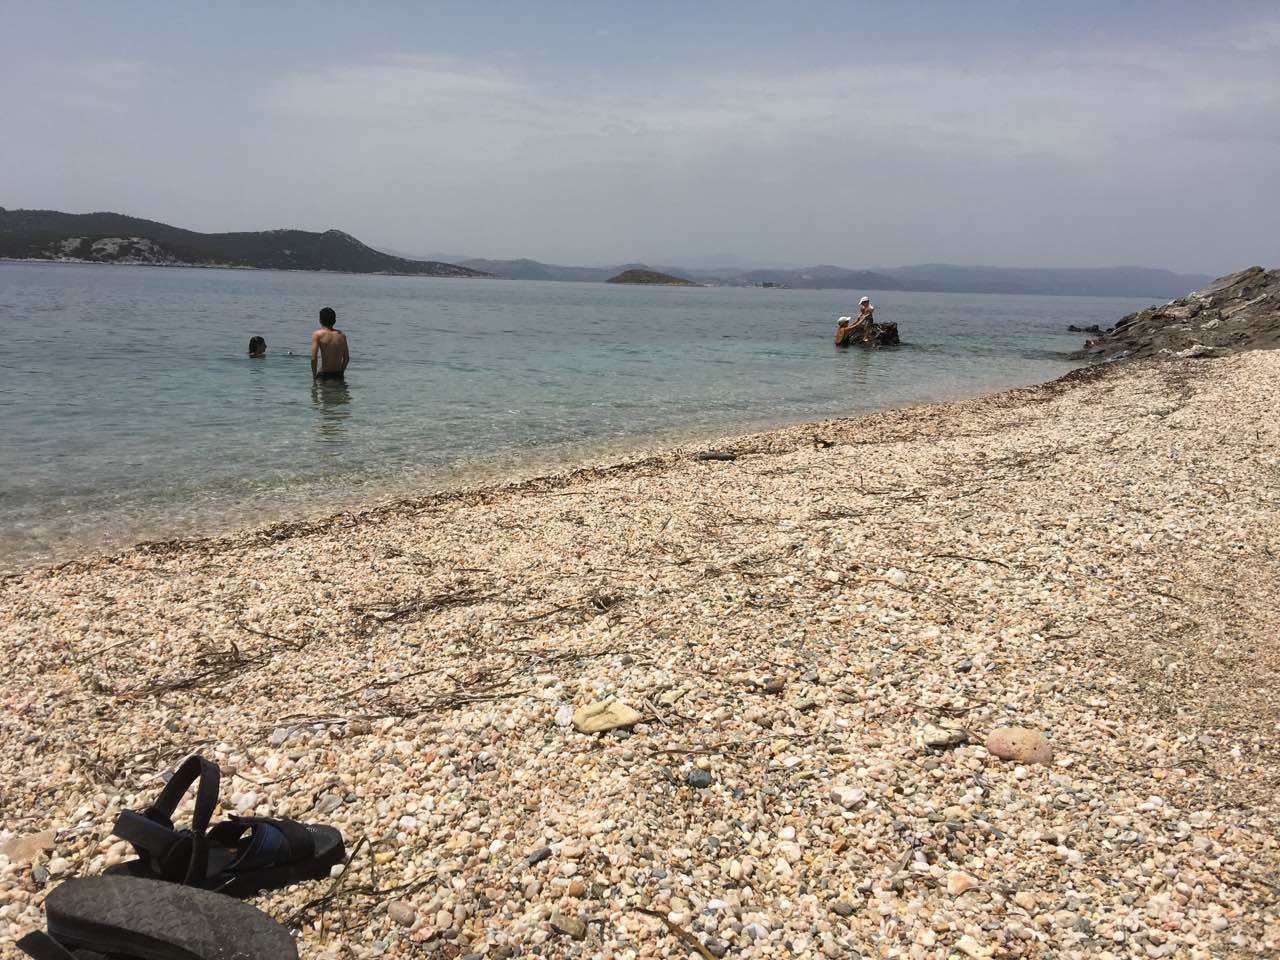 Fotografie cu Aria beach - locul popular printre cunoscătorii de relaxare